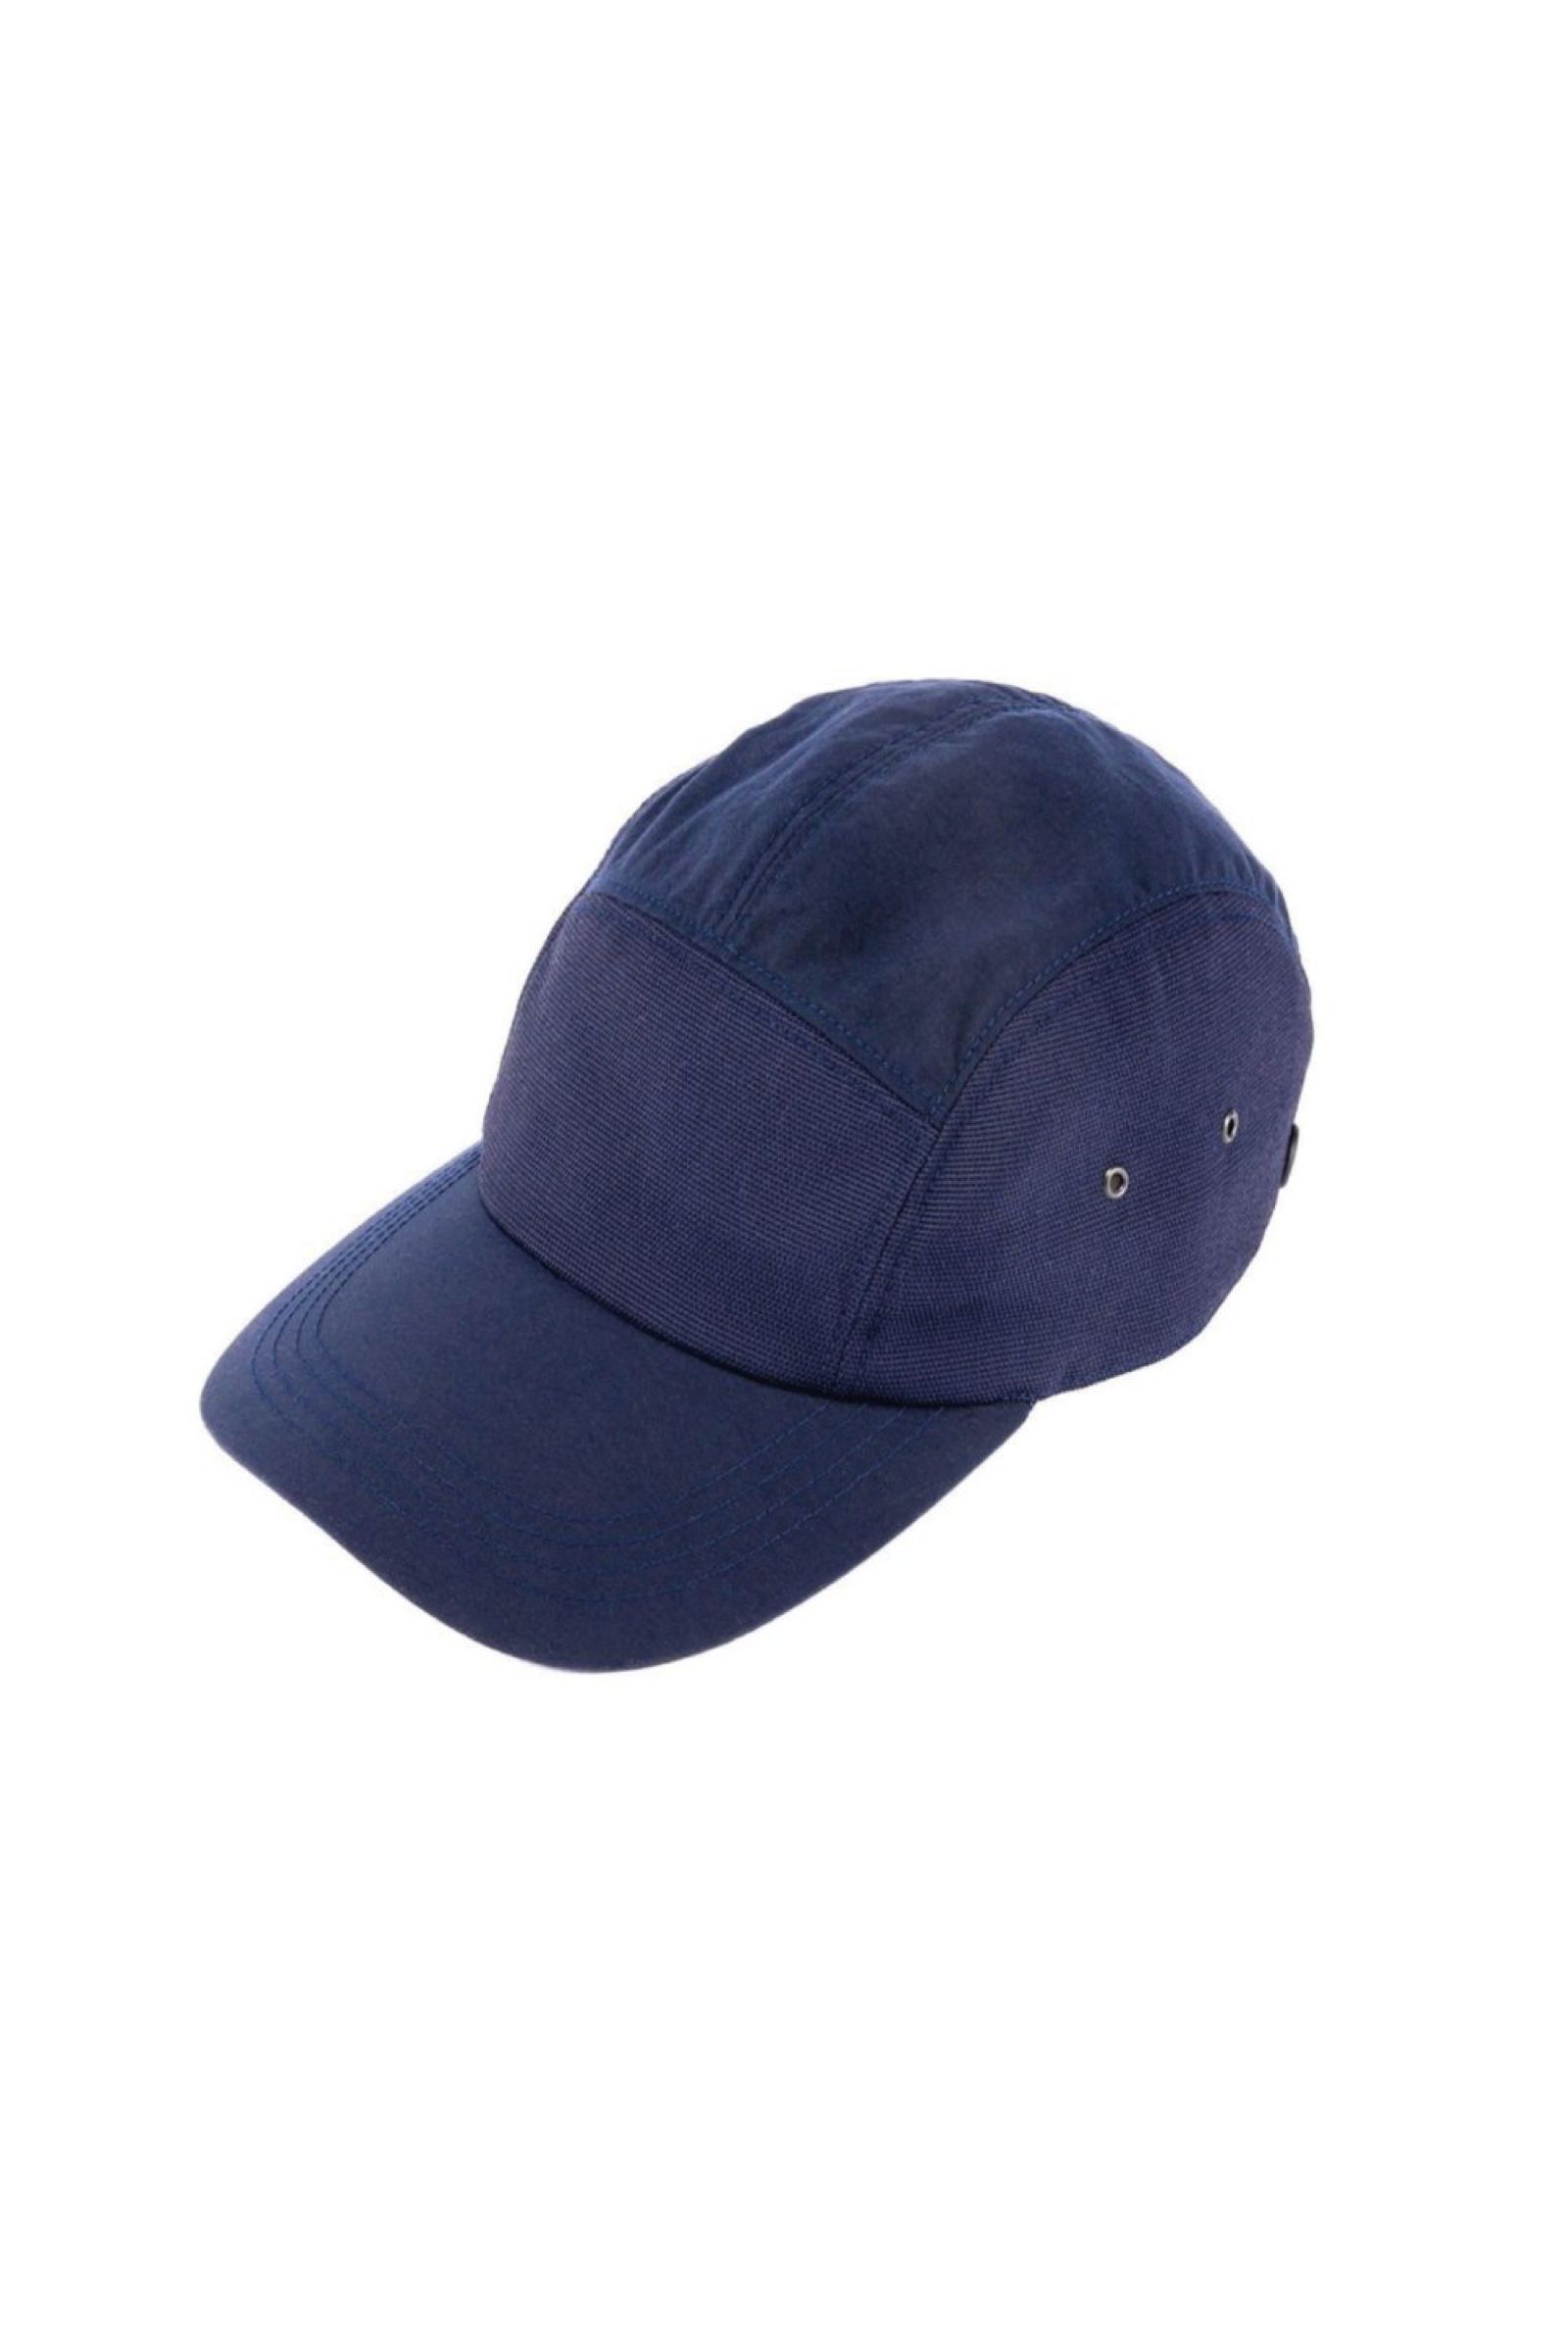 CPH - 6JET CAP / 6パネルジェットキャップ(帽子) - ブラック | tomoshibi